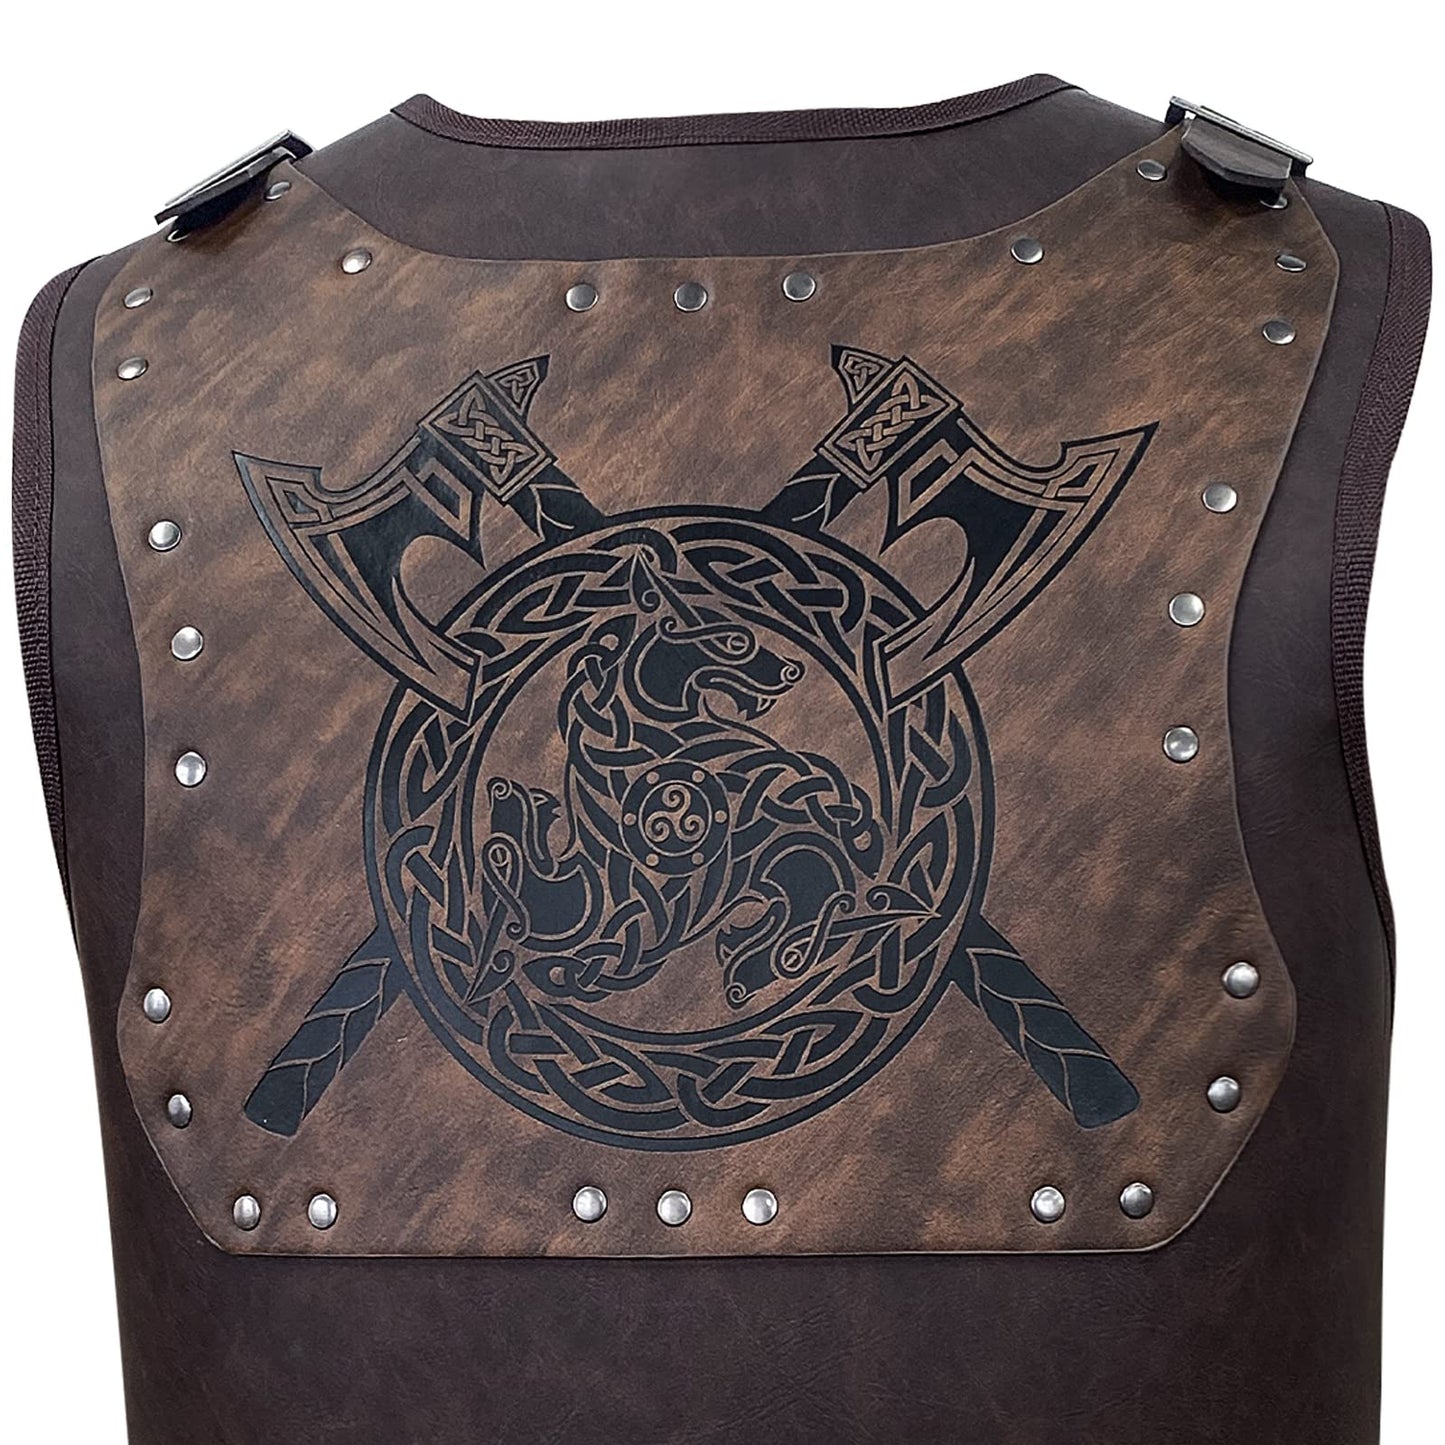 HiiFeuer Viking Warrior PU Leather Chest Armor